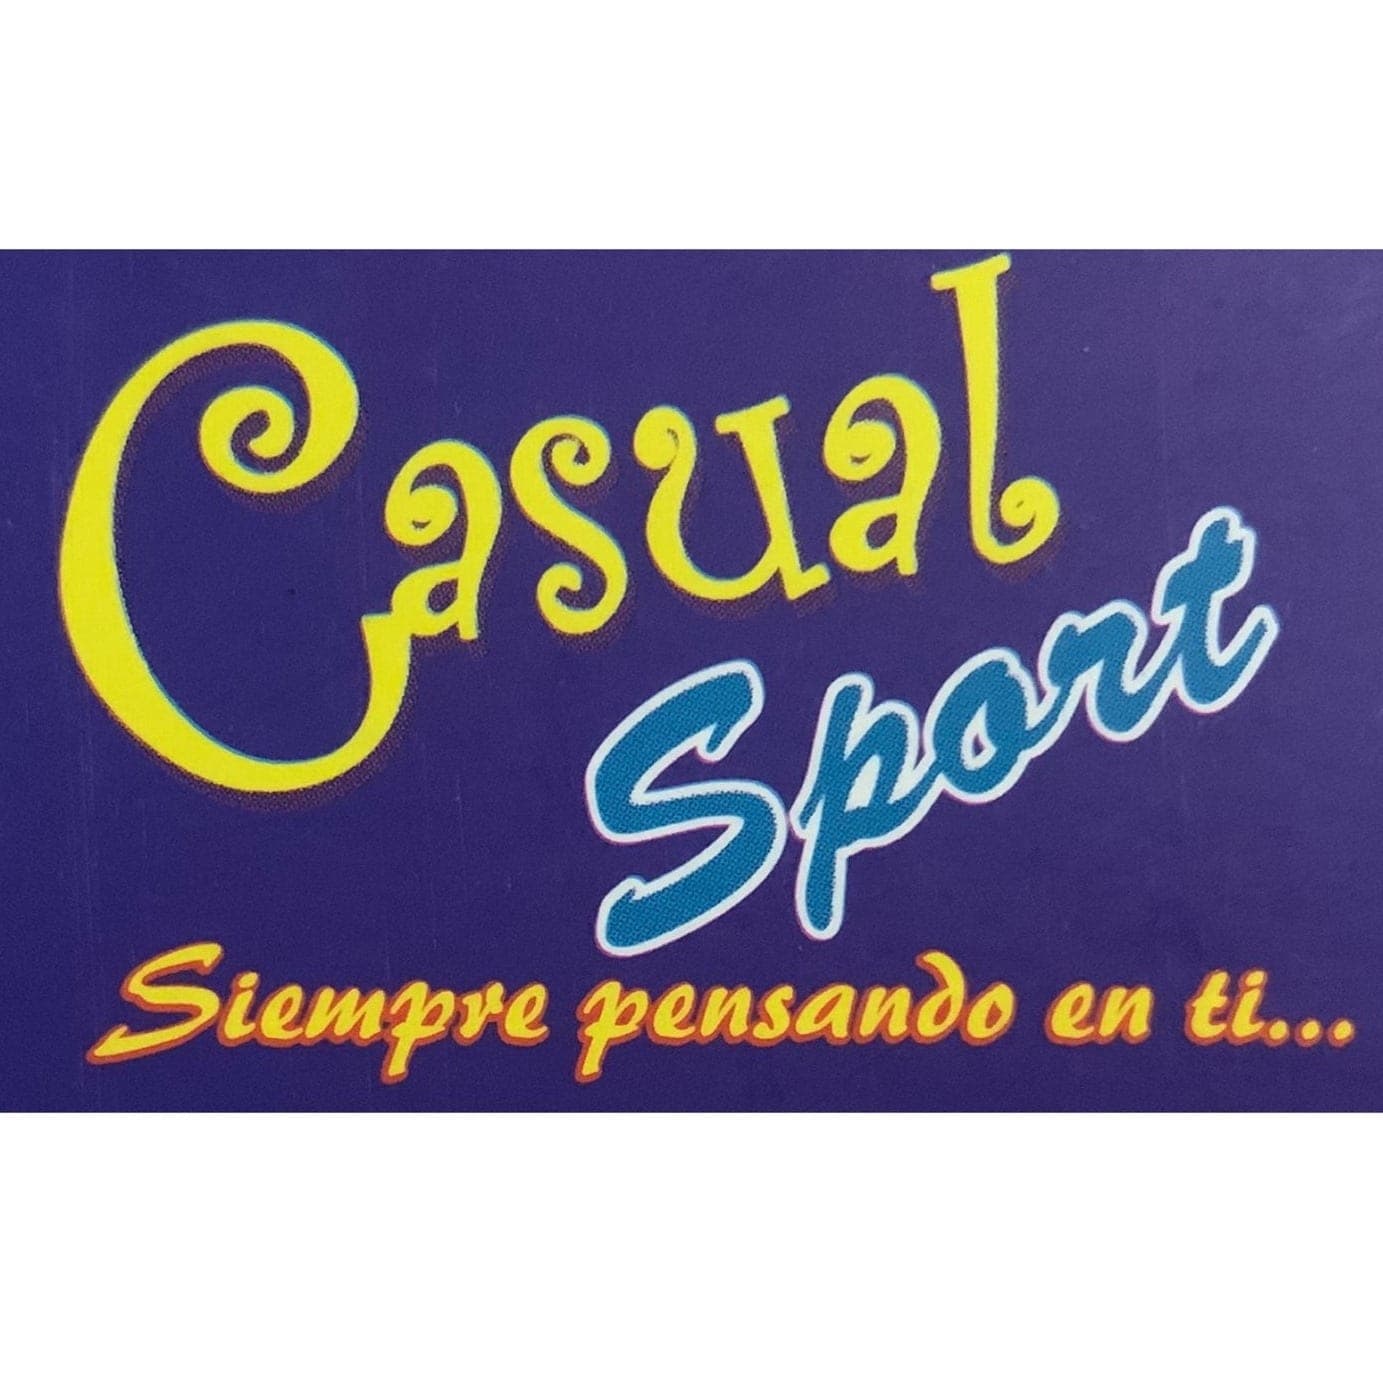 Casual Sport